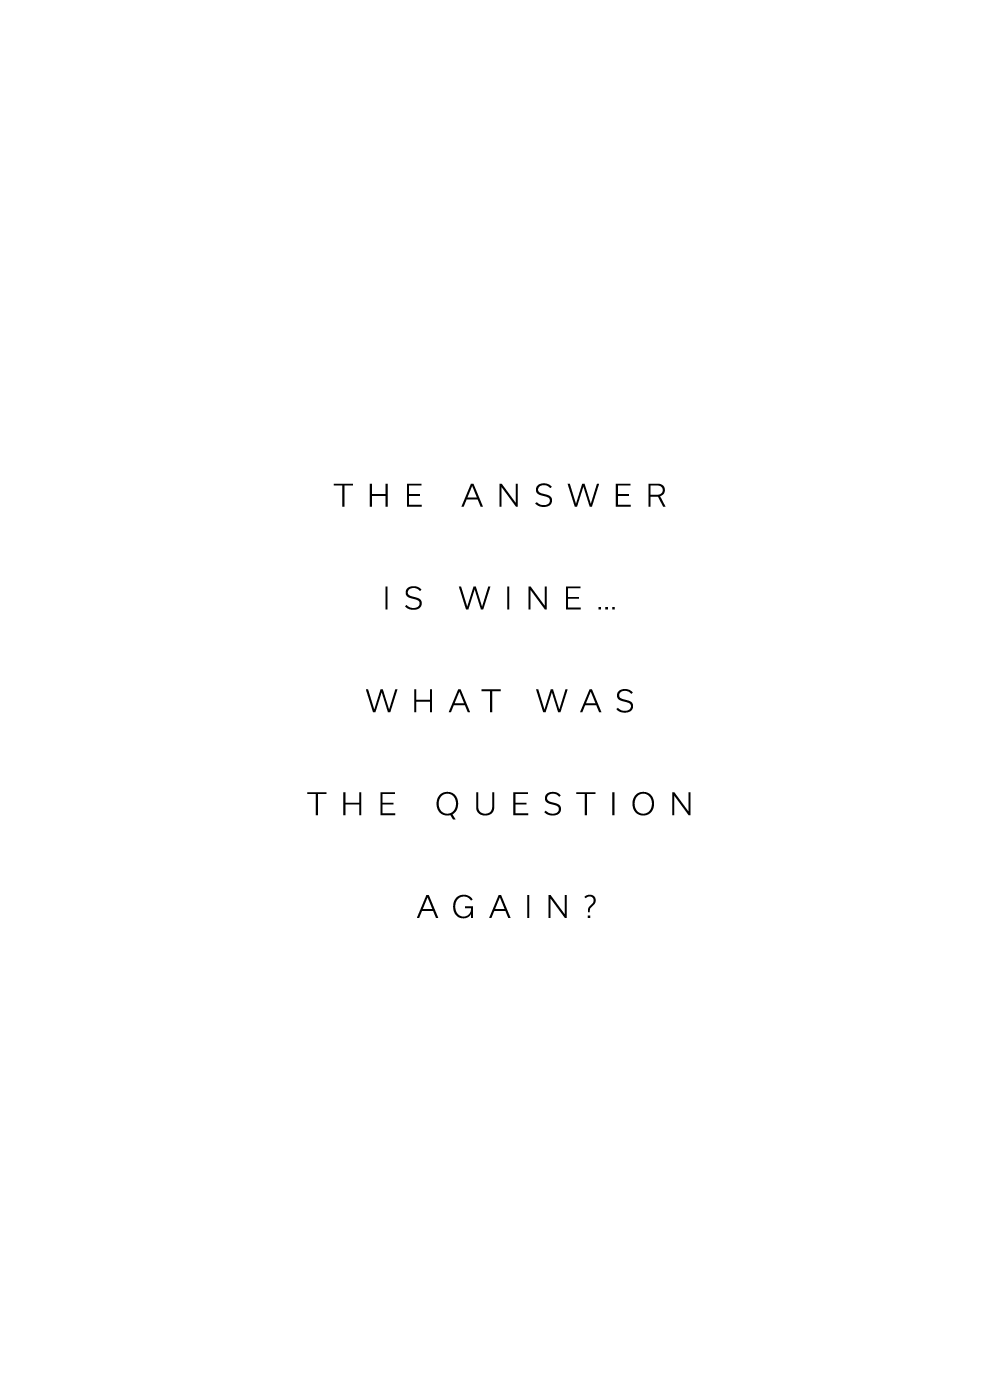 "The answer is wine" citatplakat